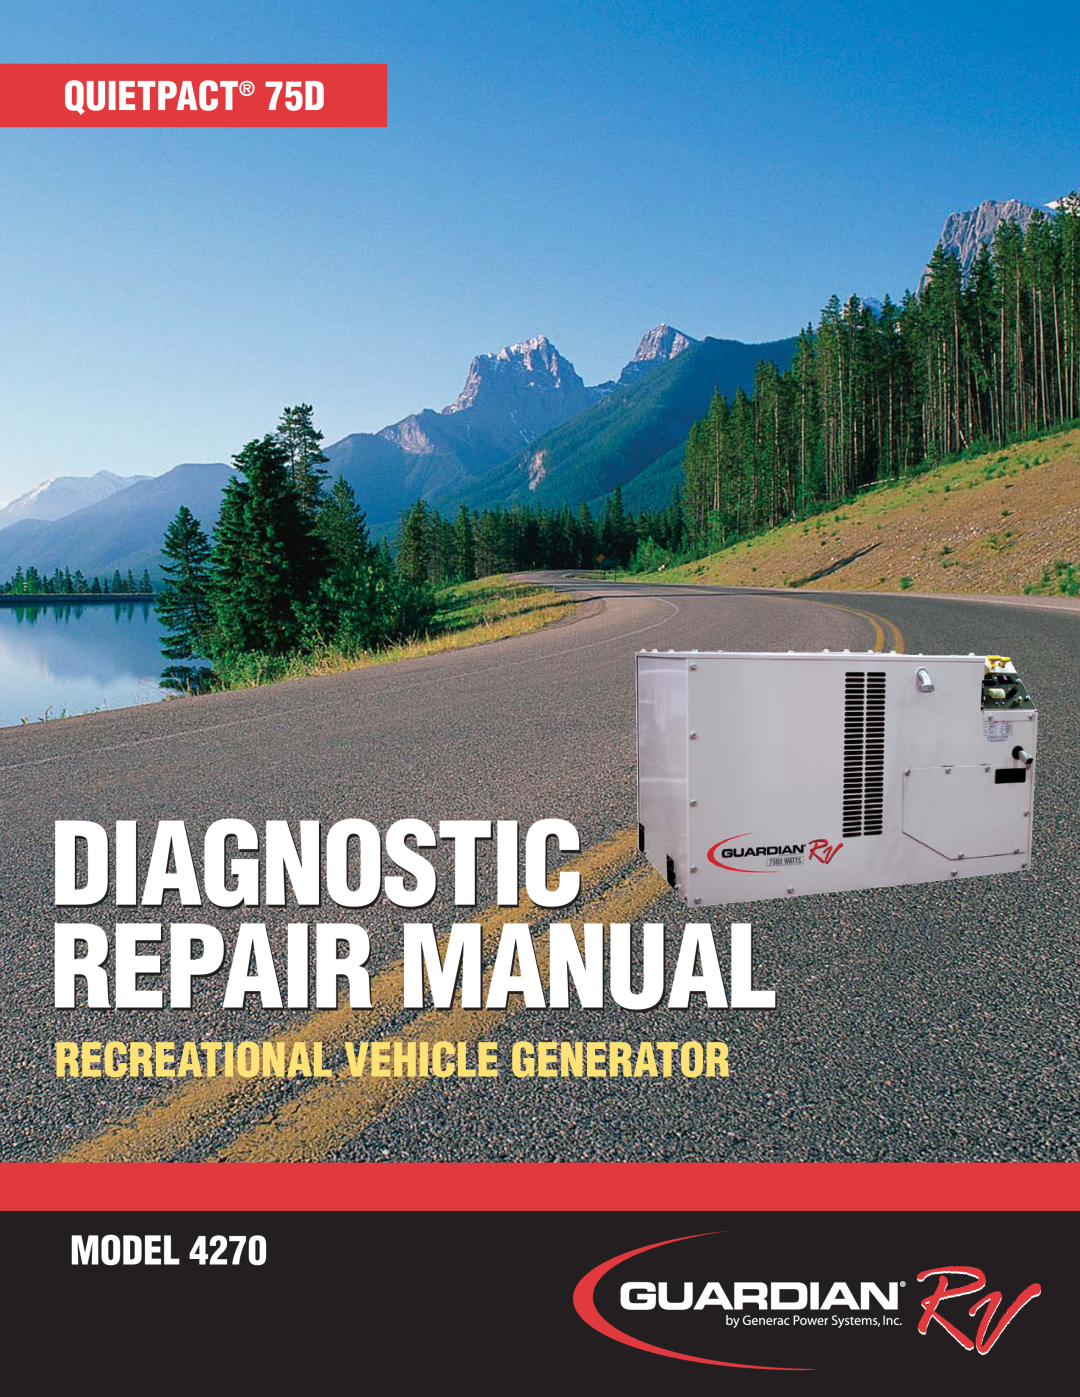 Guardian Technologies 4270 manual Diagnostic Repair Manual, Recreational Vehicle Generator, QUIETPACT 75D, Model 